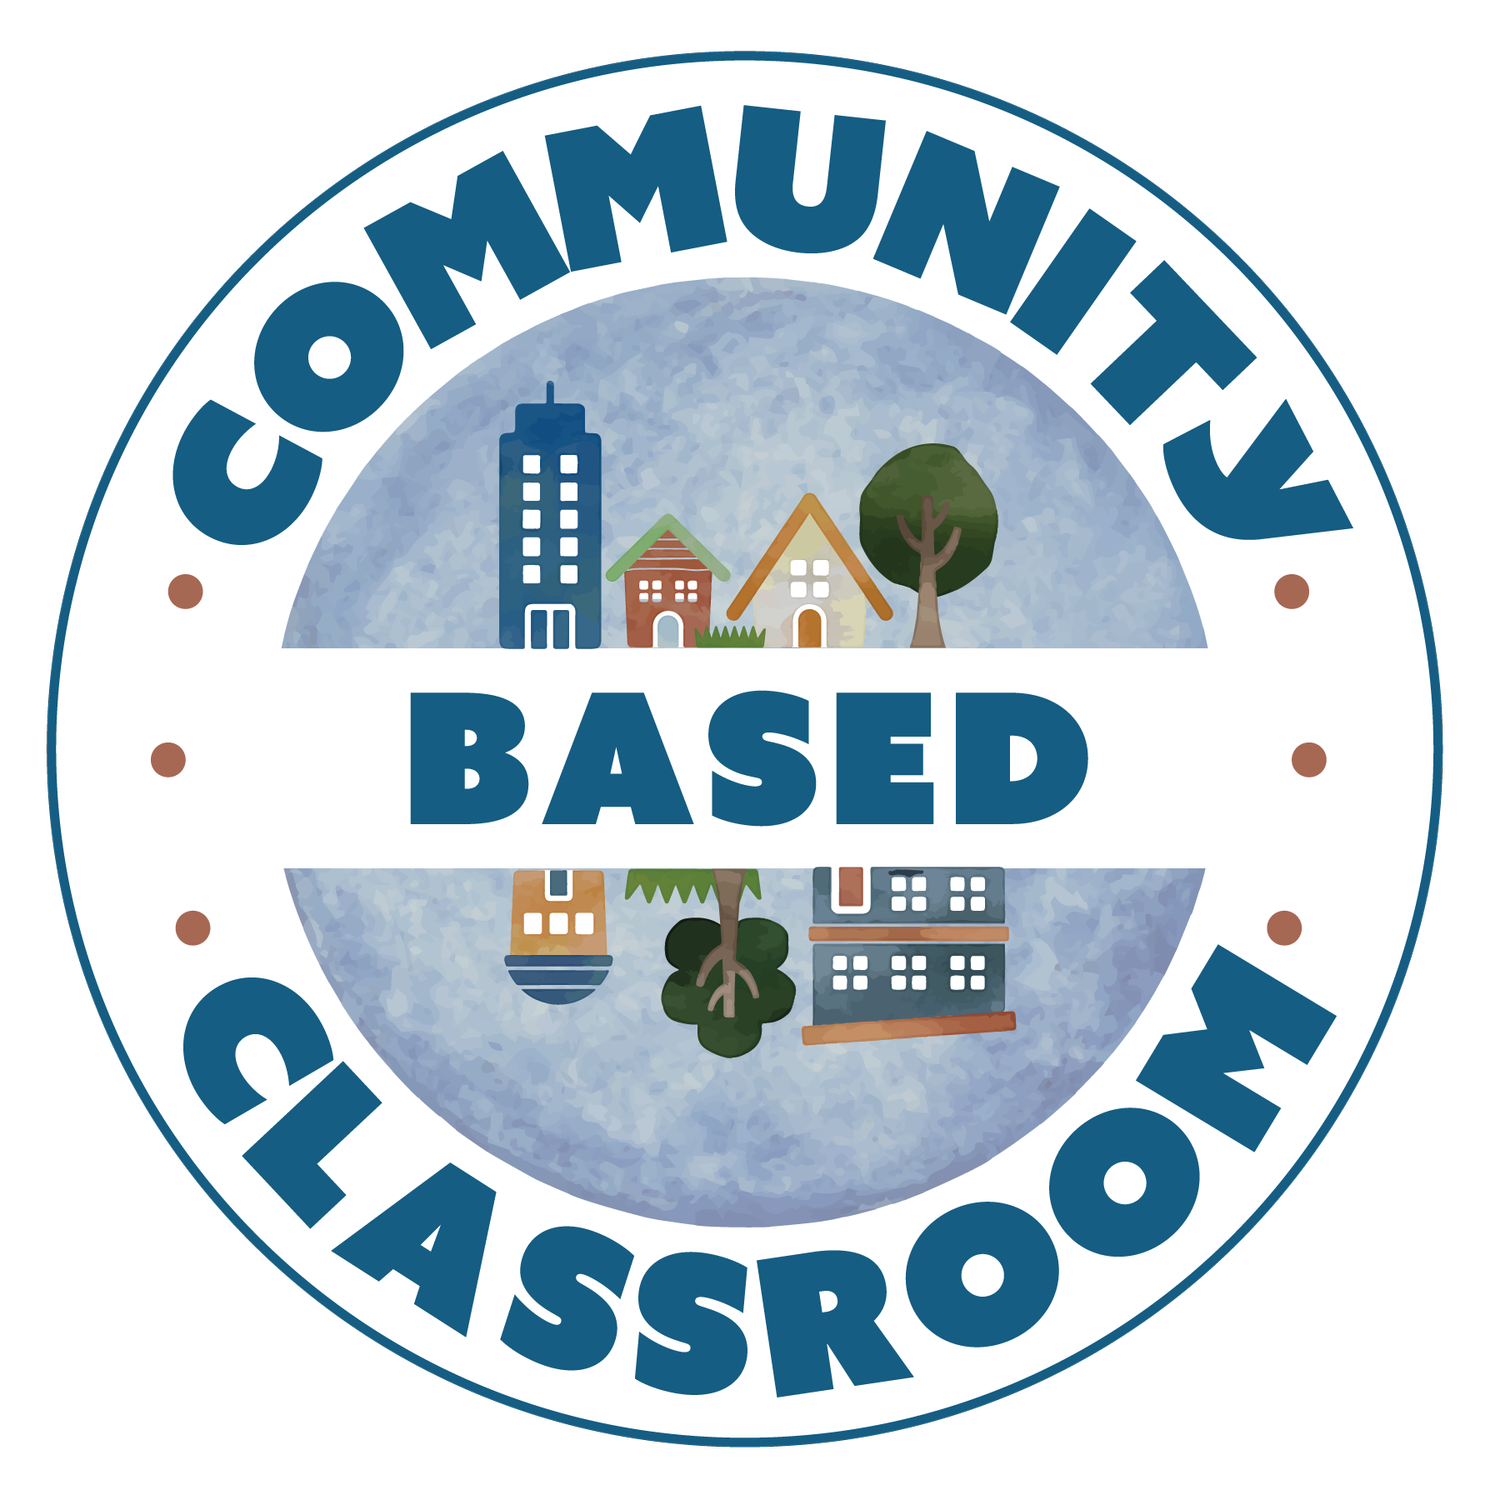 Community Based Classroom